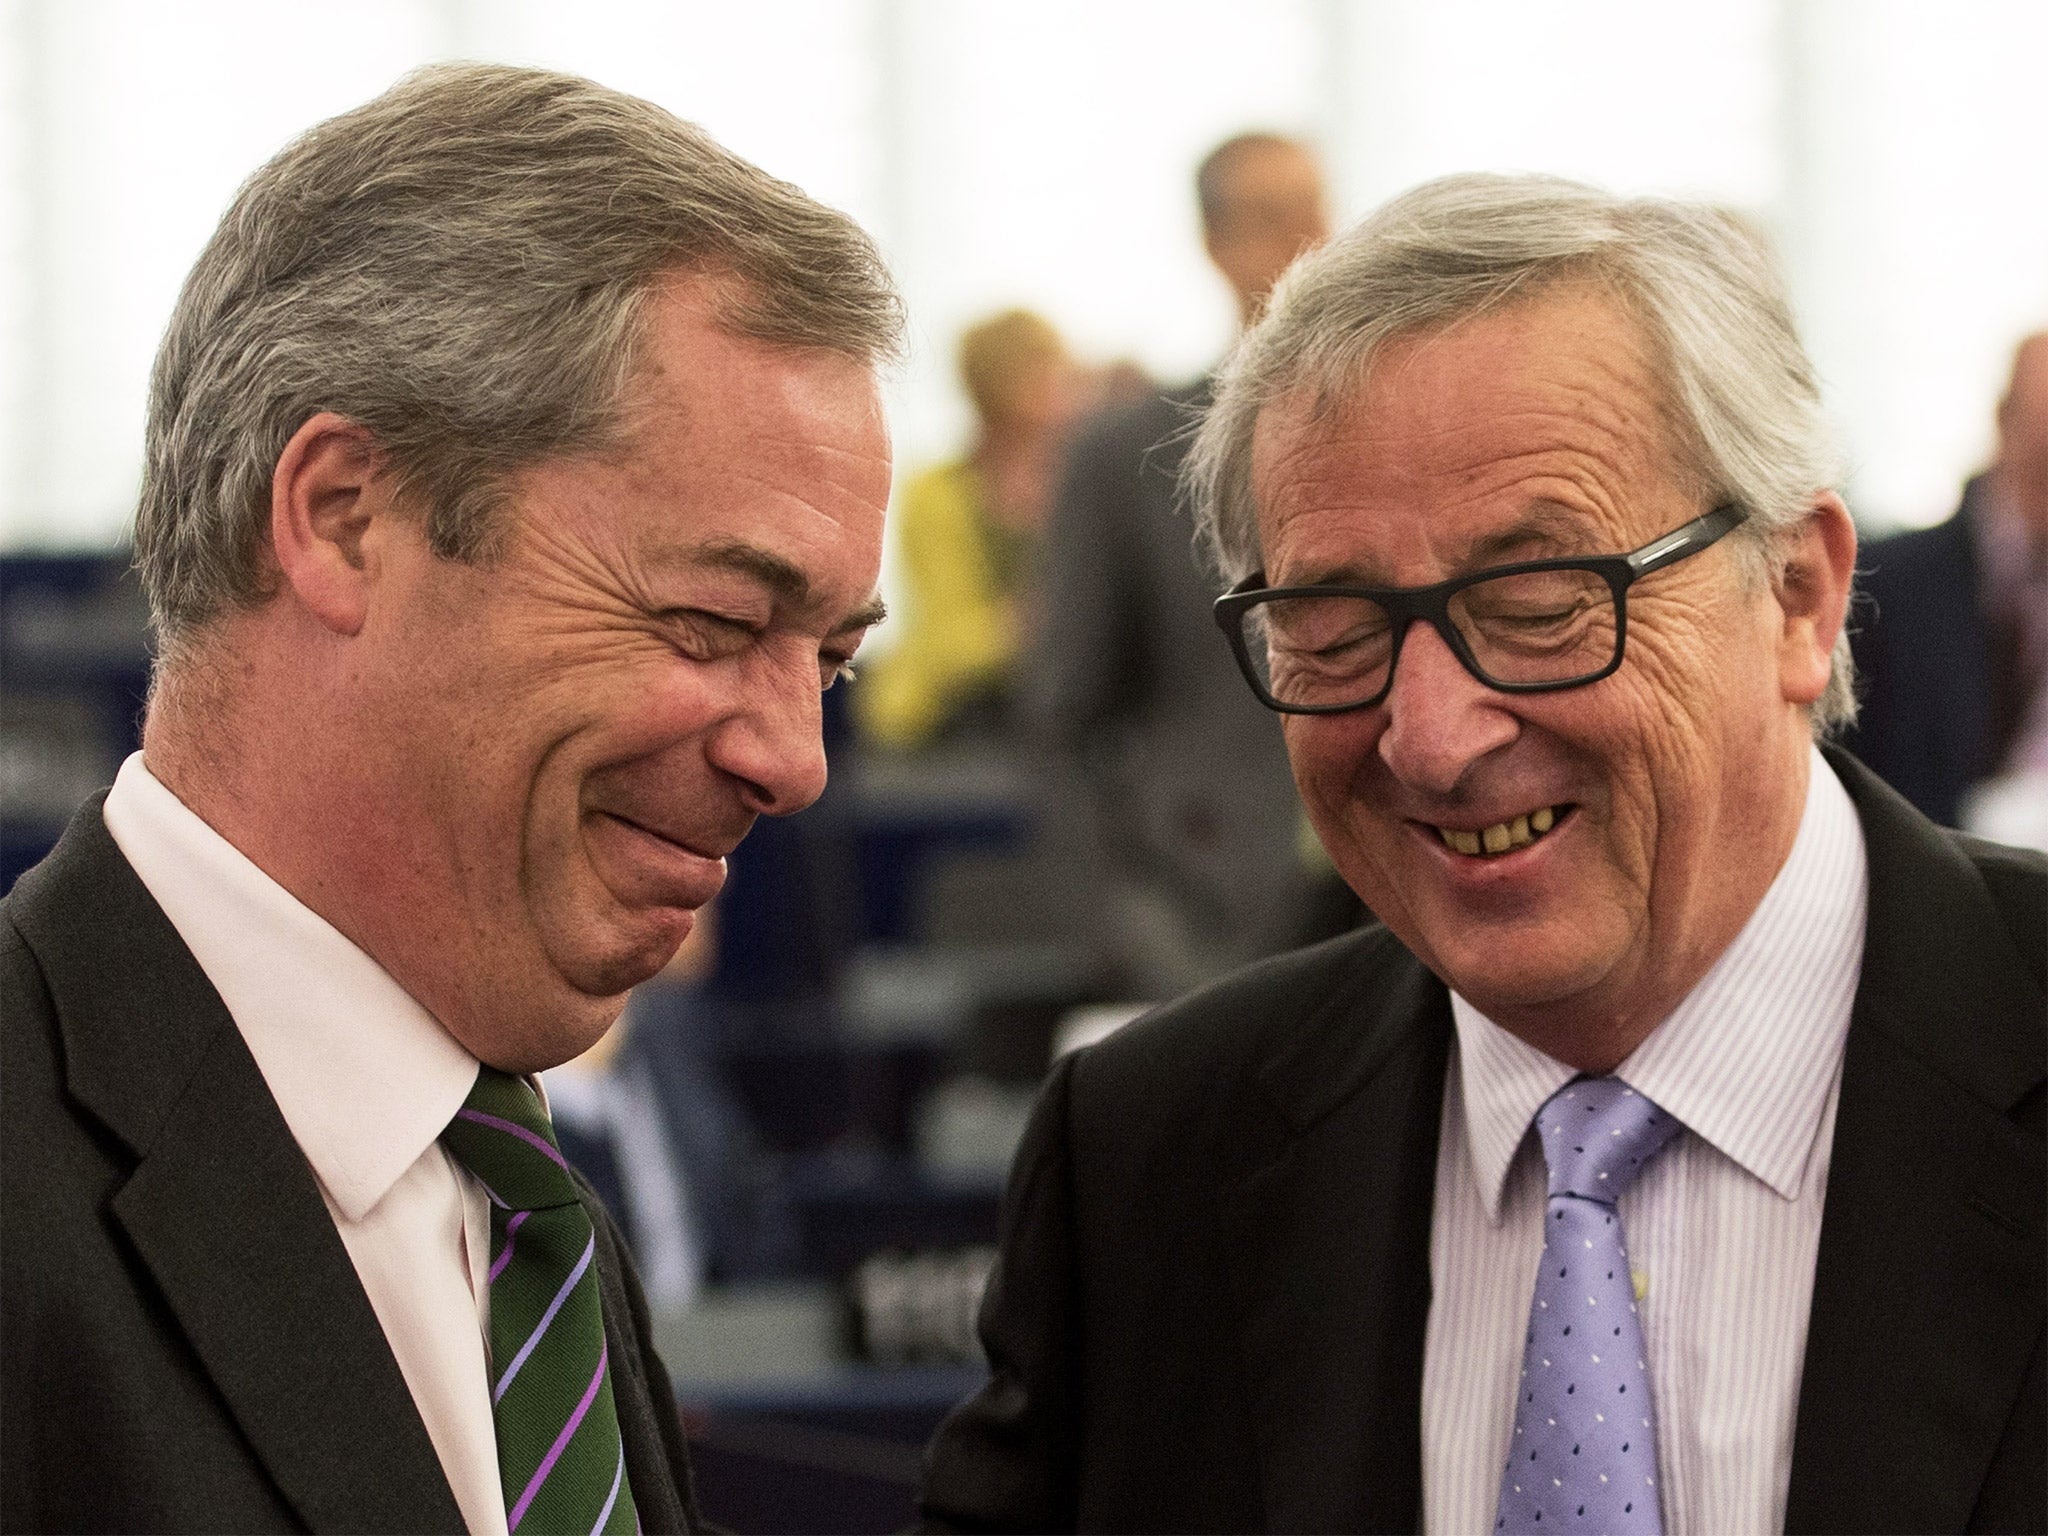 Nigel Farage shares a joke with European Commission president Jean-Claude Juncker in Strasbourg yesterday